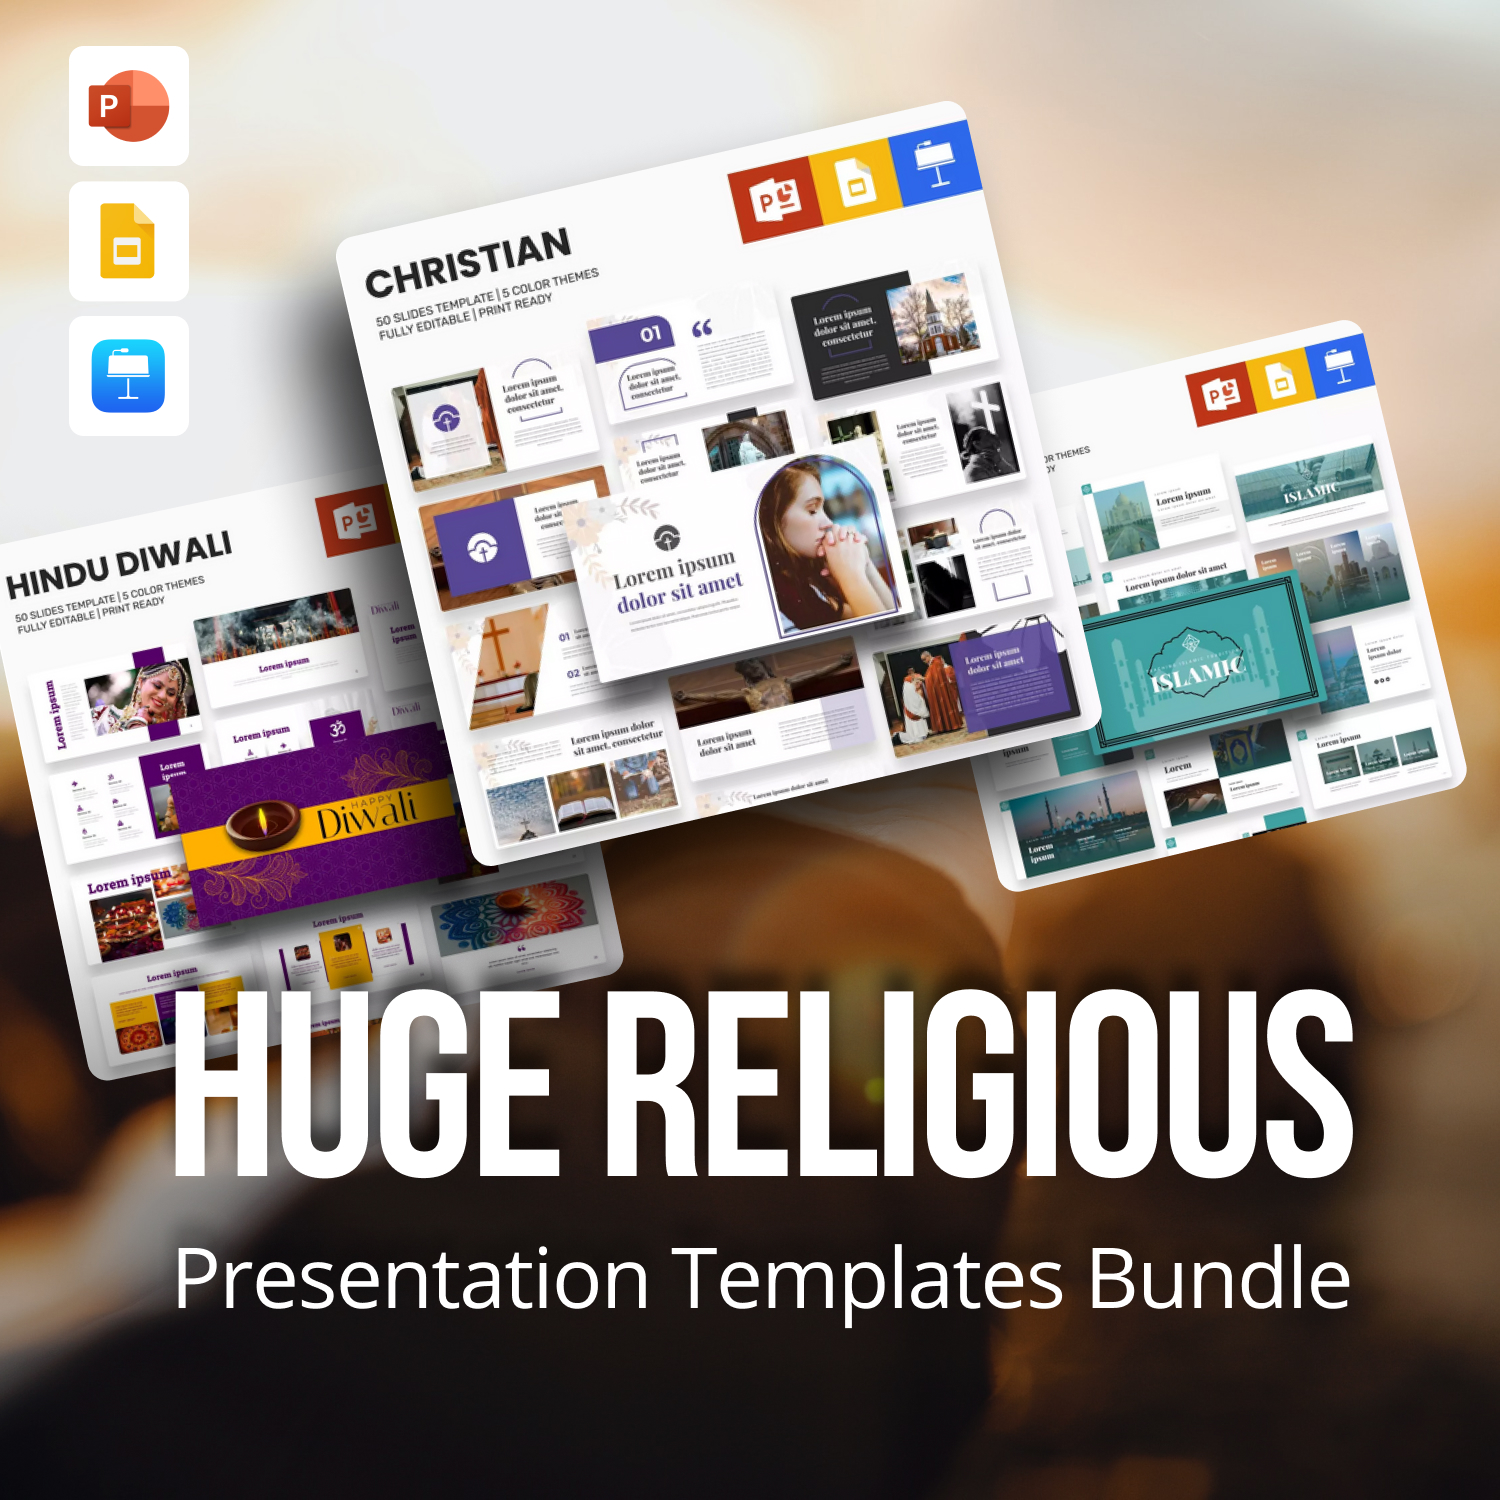 Huge Religious Presentation Templates Bundle cover image.